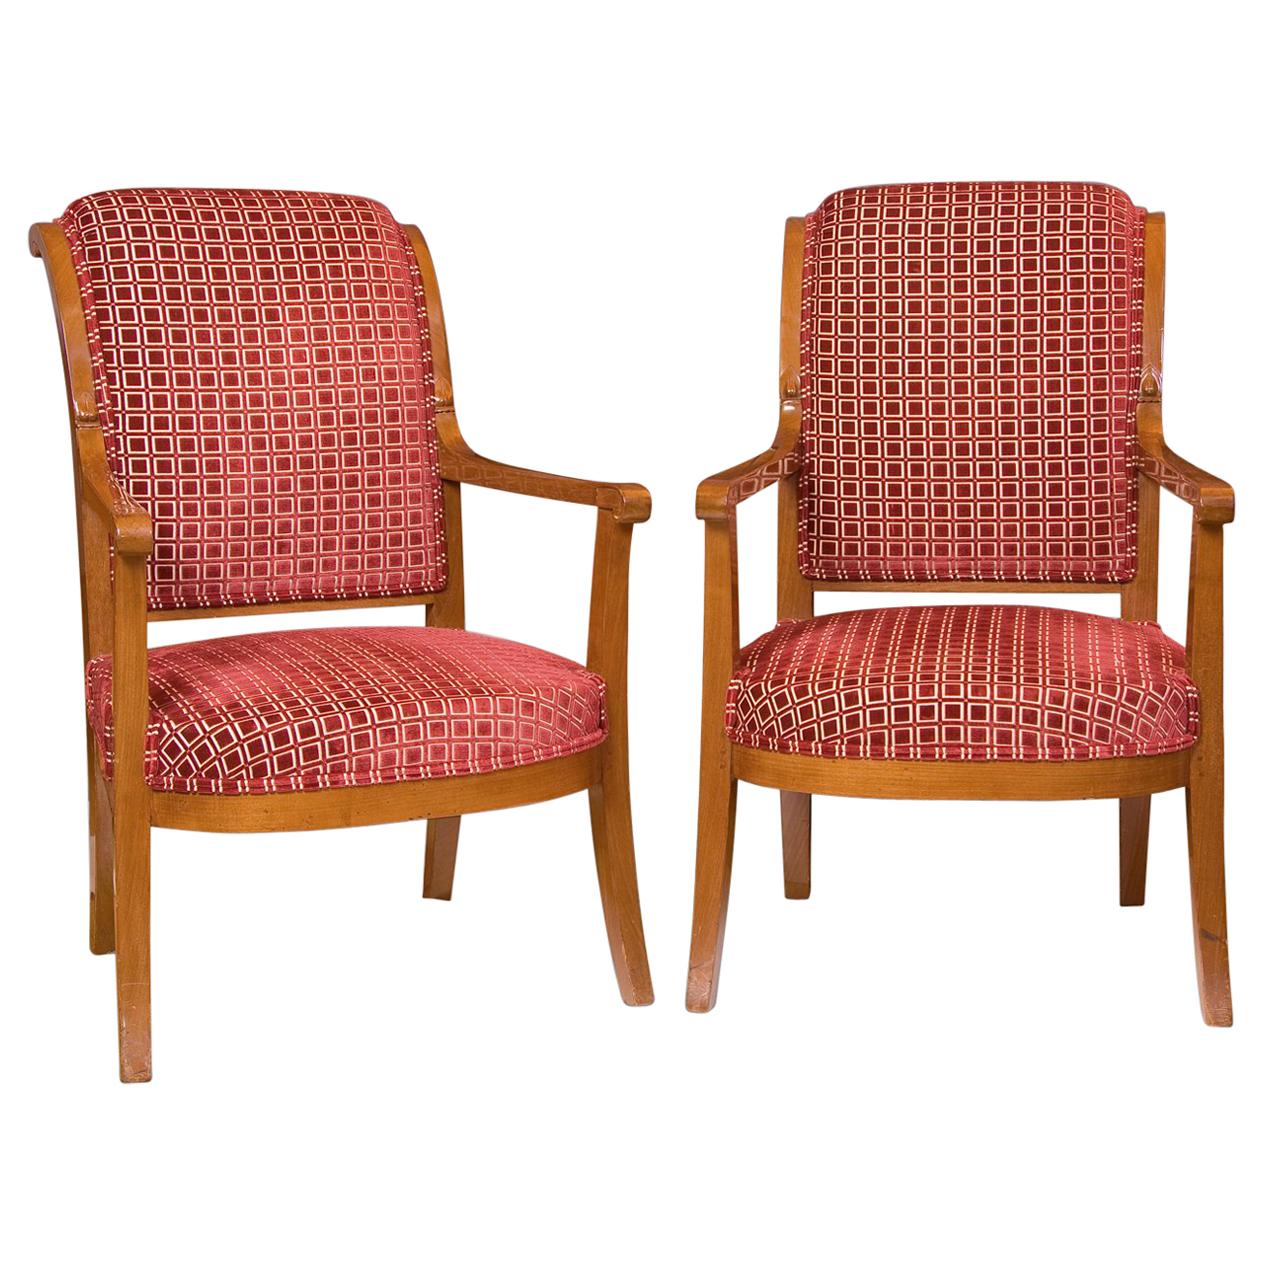 Stilisierte  Sessel aus der Directoire-Periode, um 1800